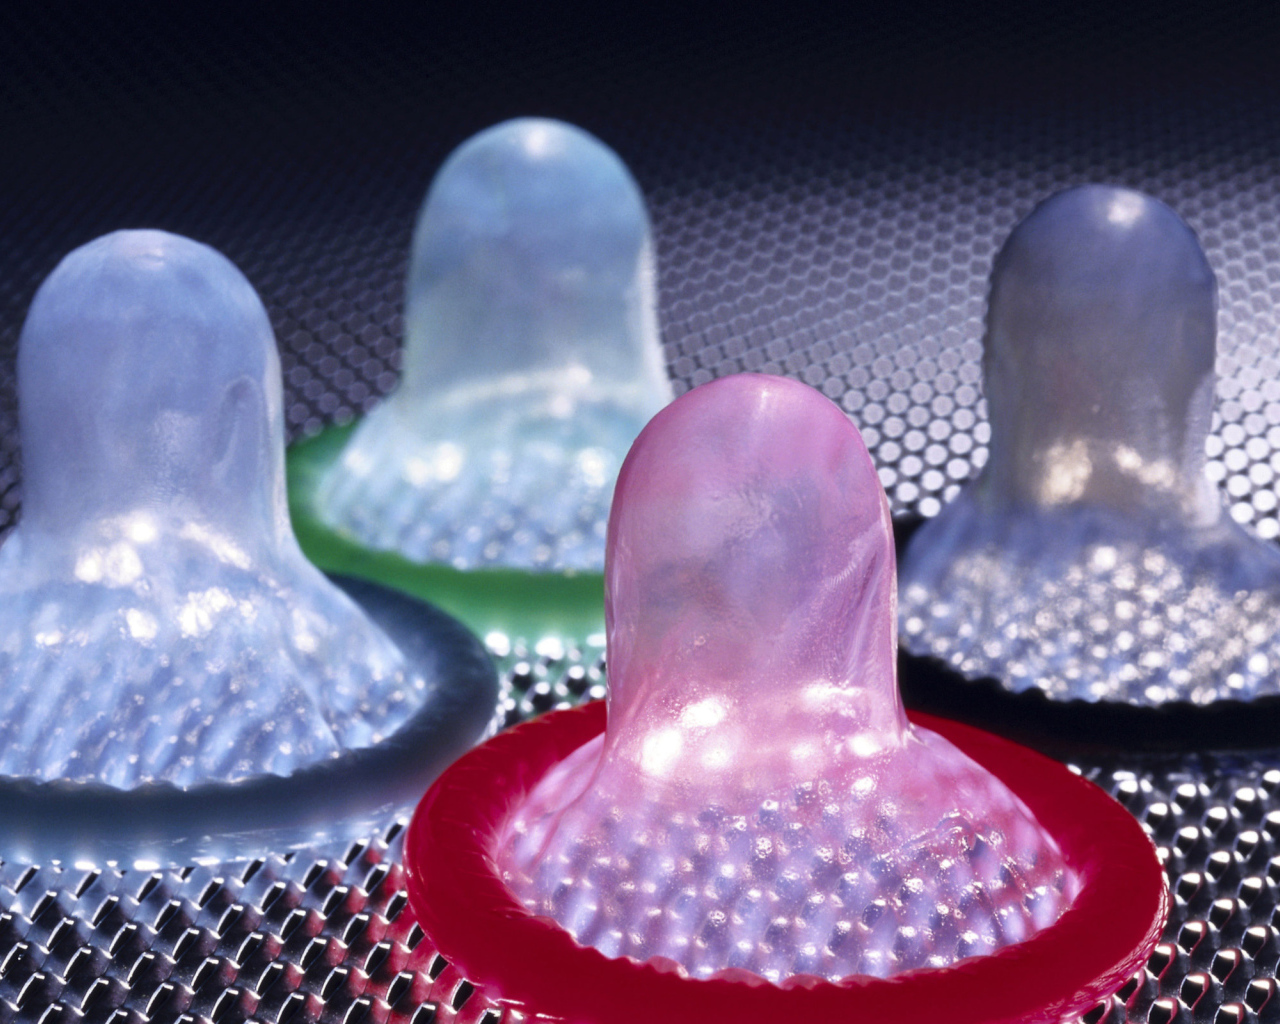 Colour condoms